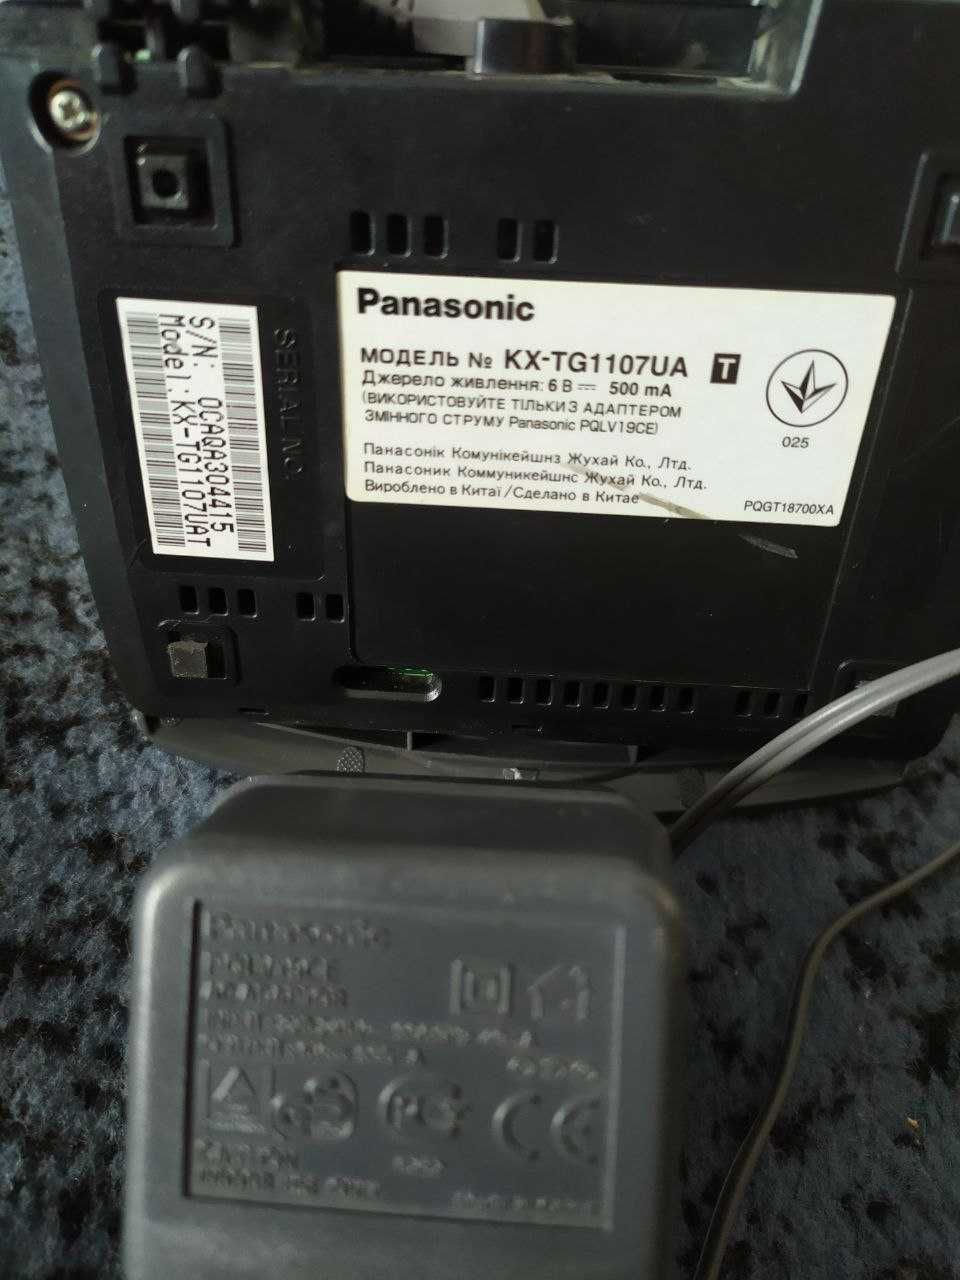 Panasonic KX-TG1107UA